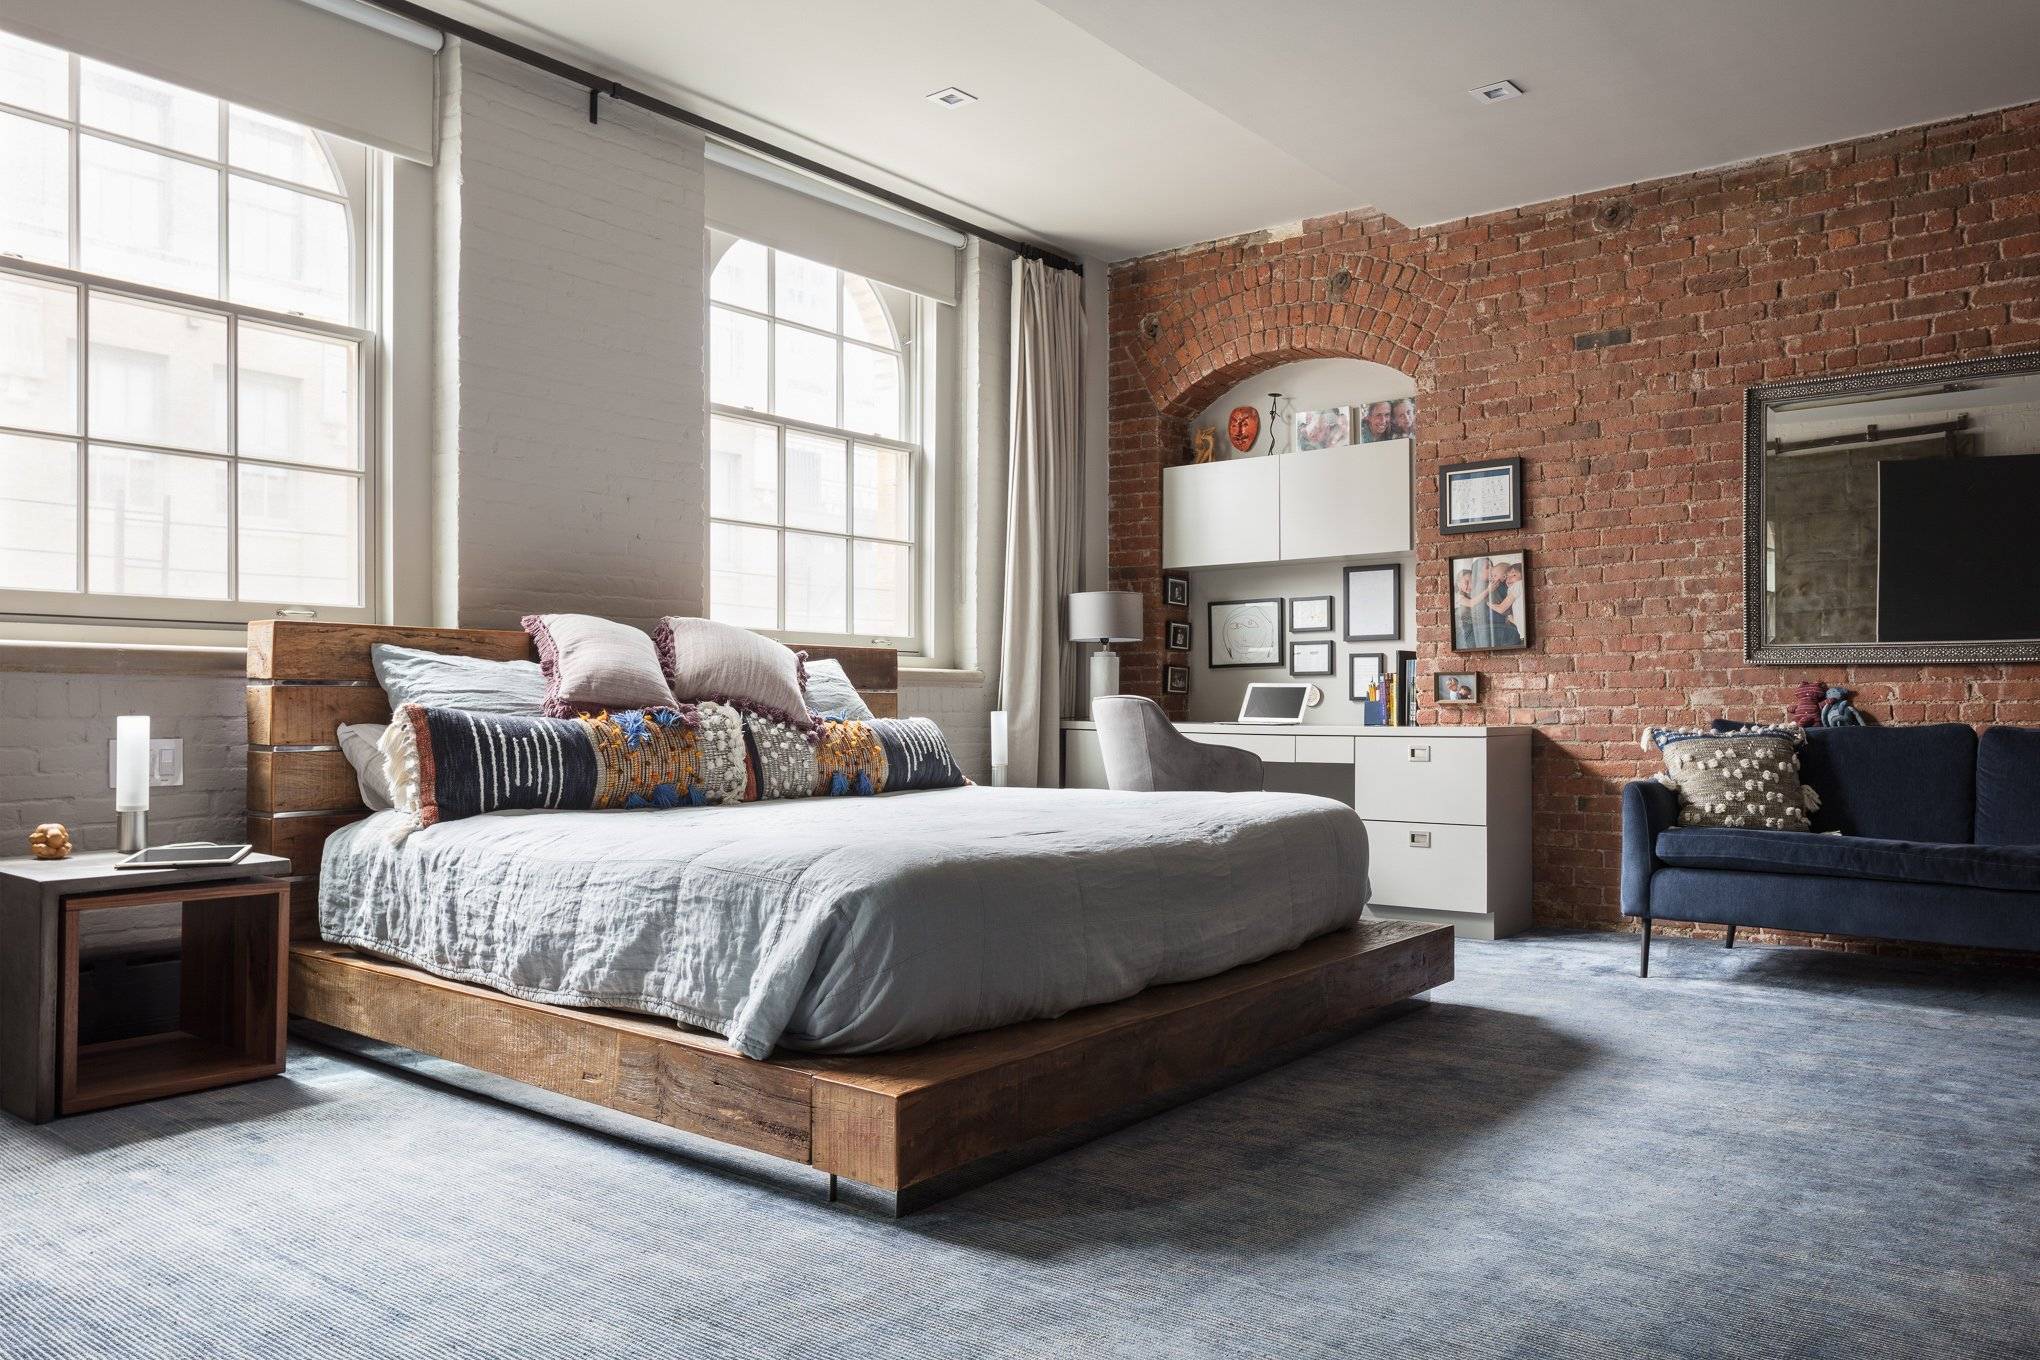 Спальня в стиле лофт (150 фото): новинки красивого дизайна спальни